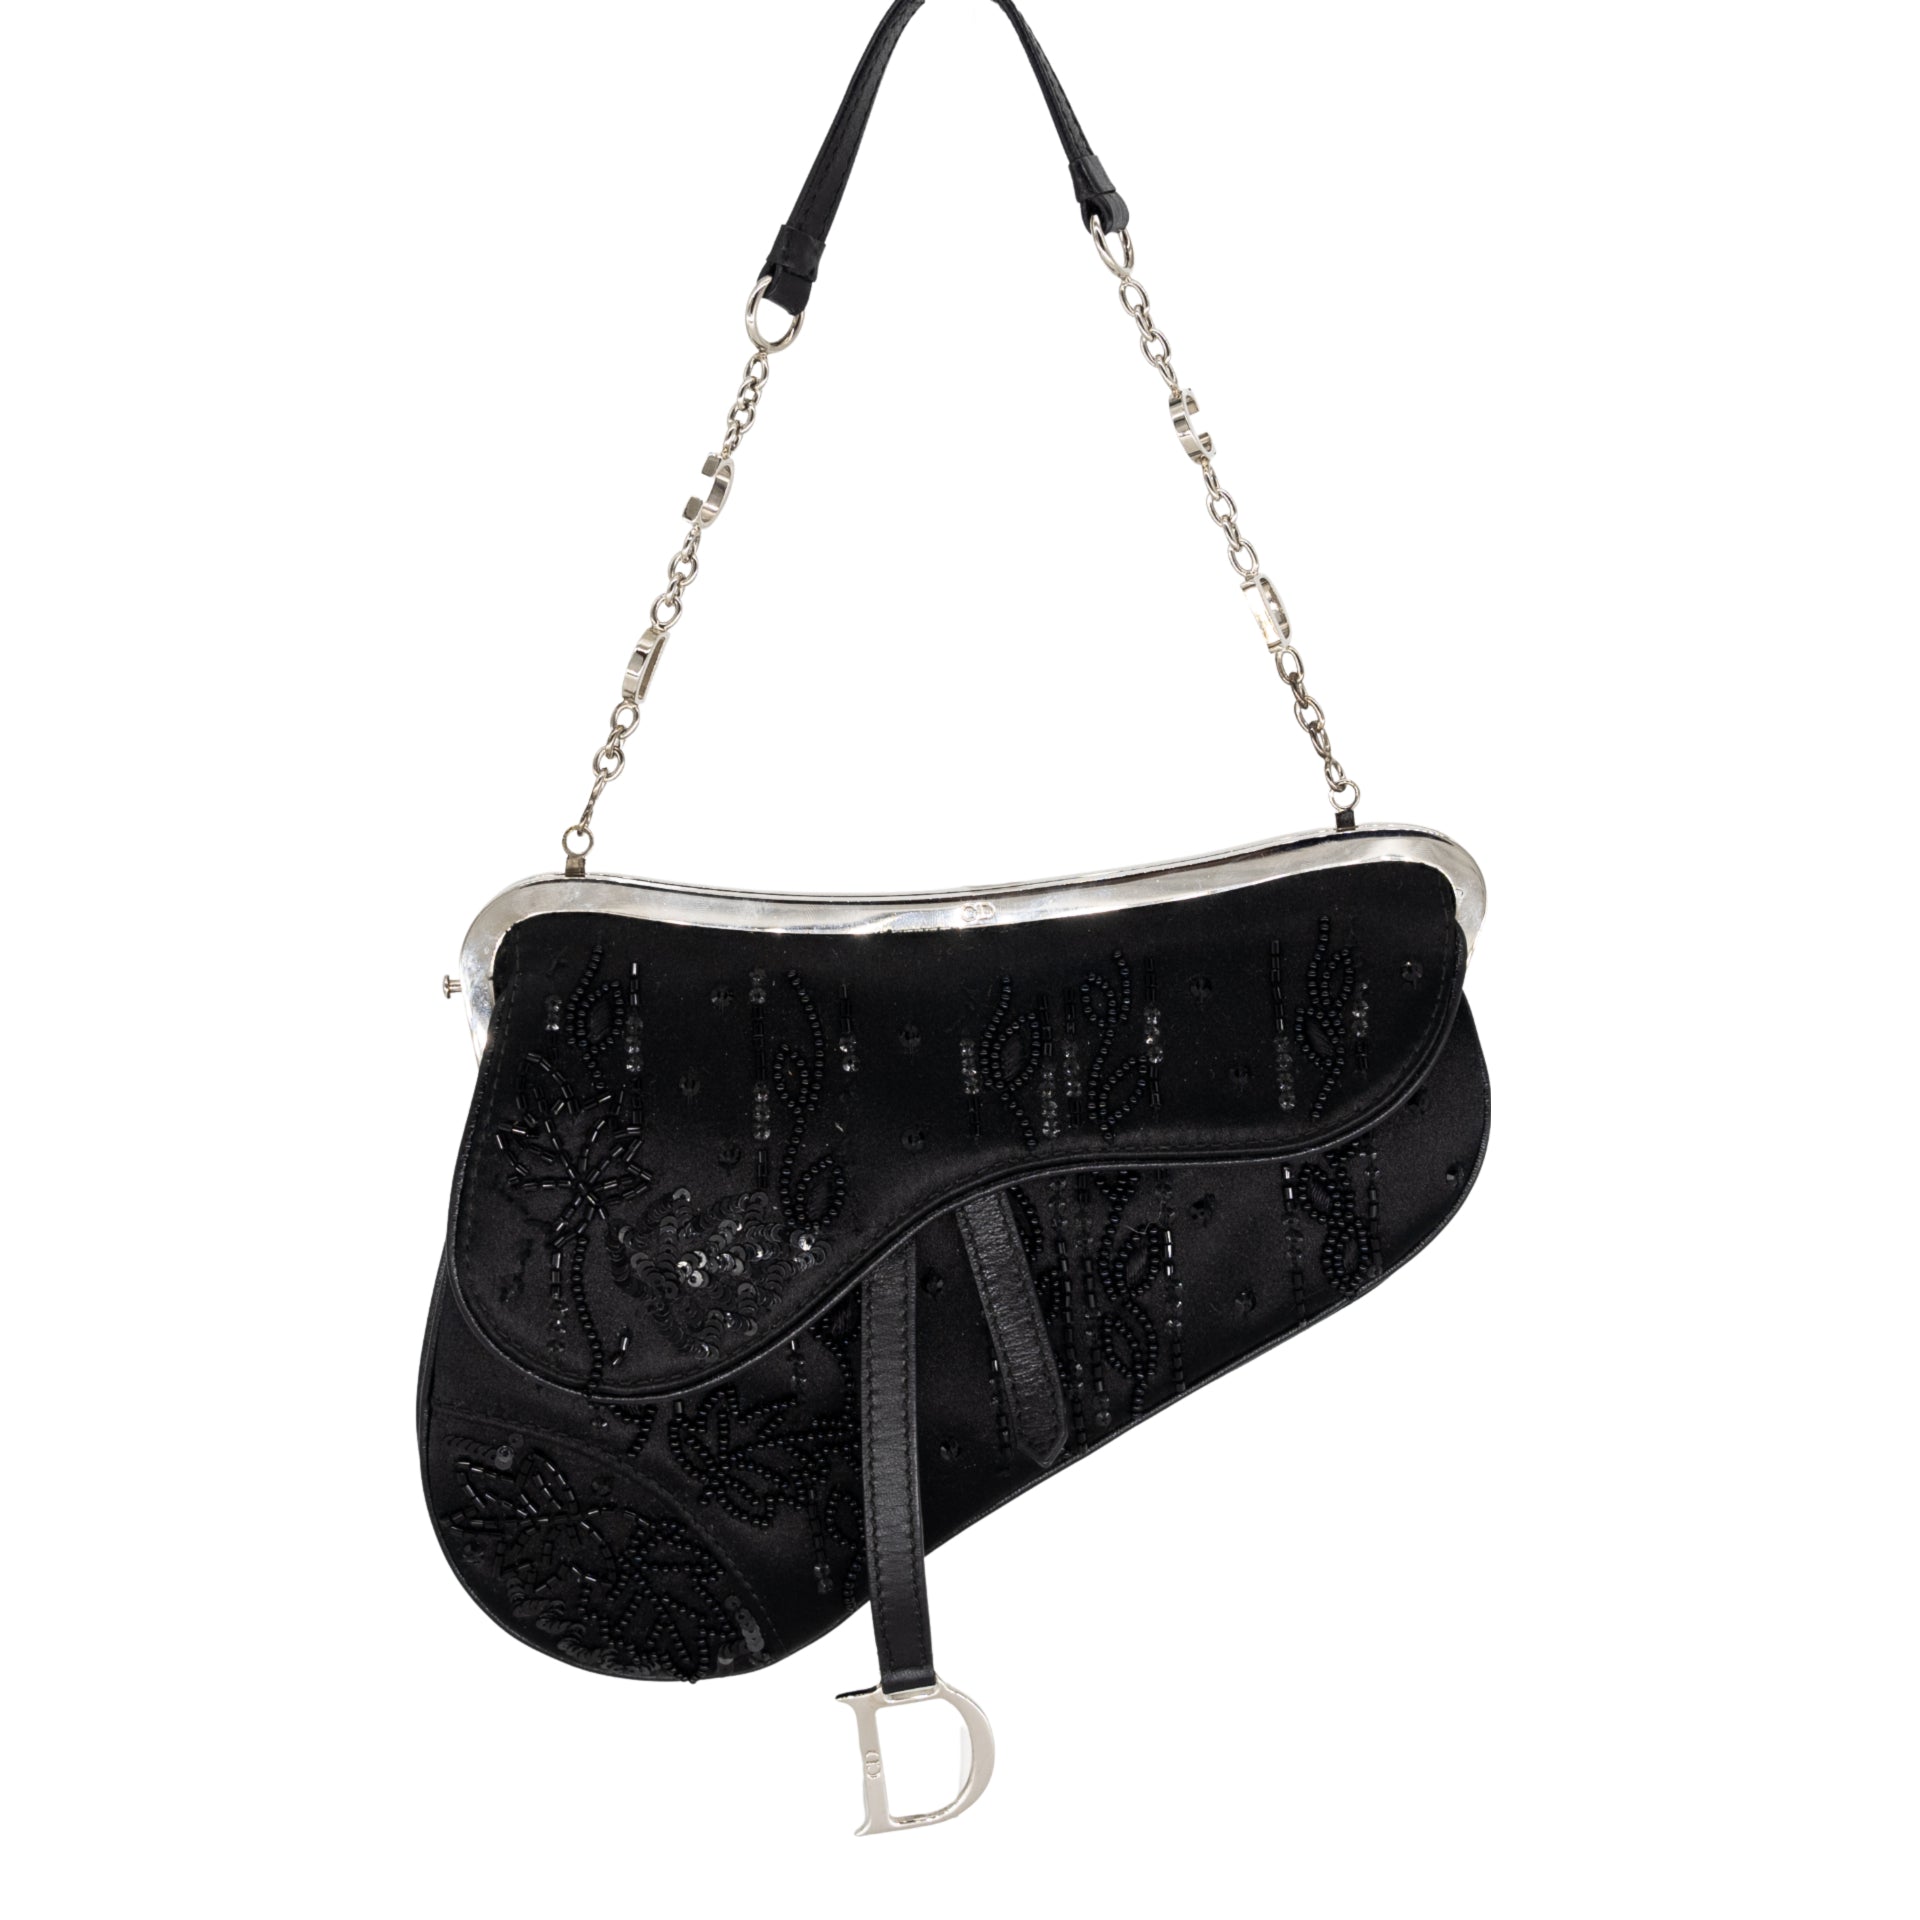 Medium or Mini Dior Saddle Bag?